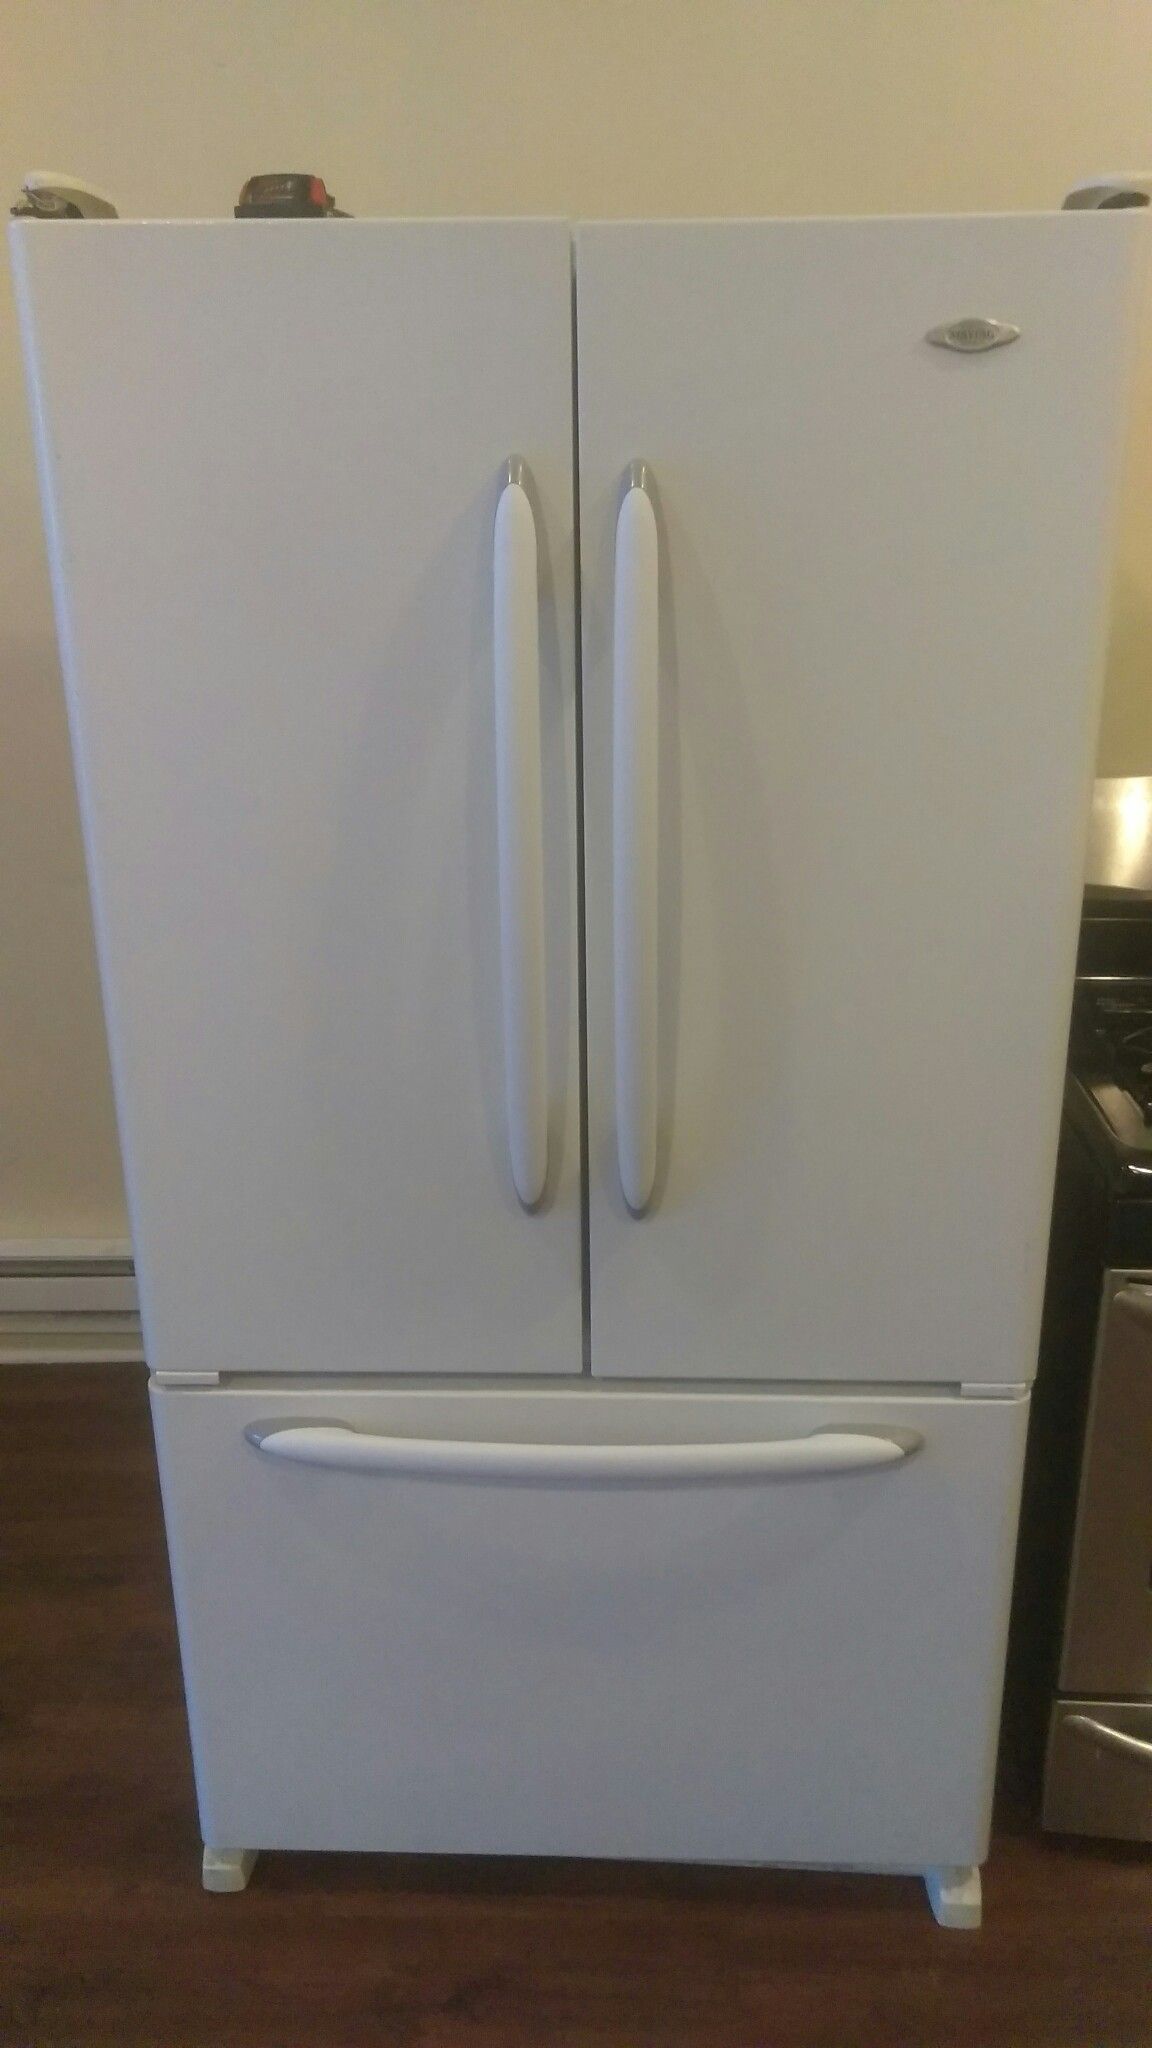 Maytag!!! White 3 door fridge very spacious